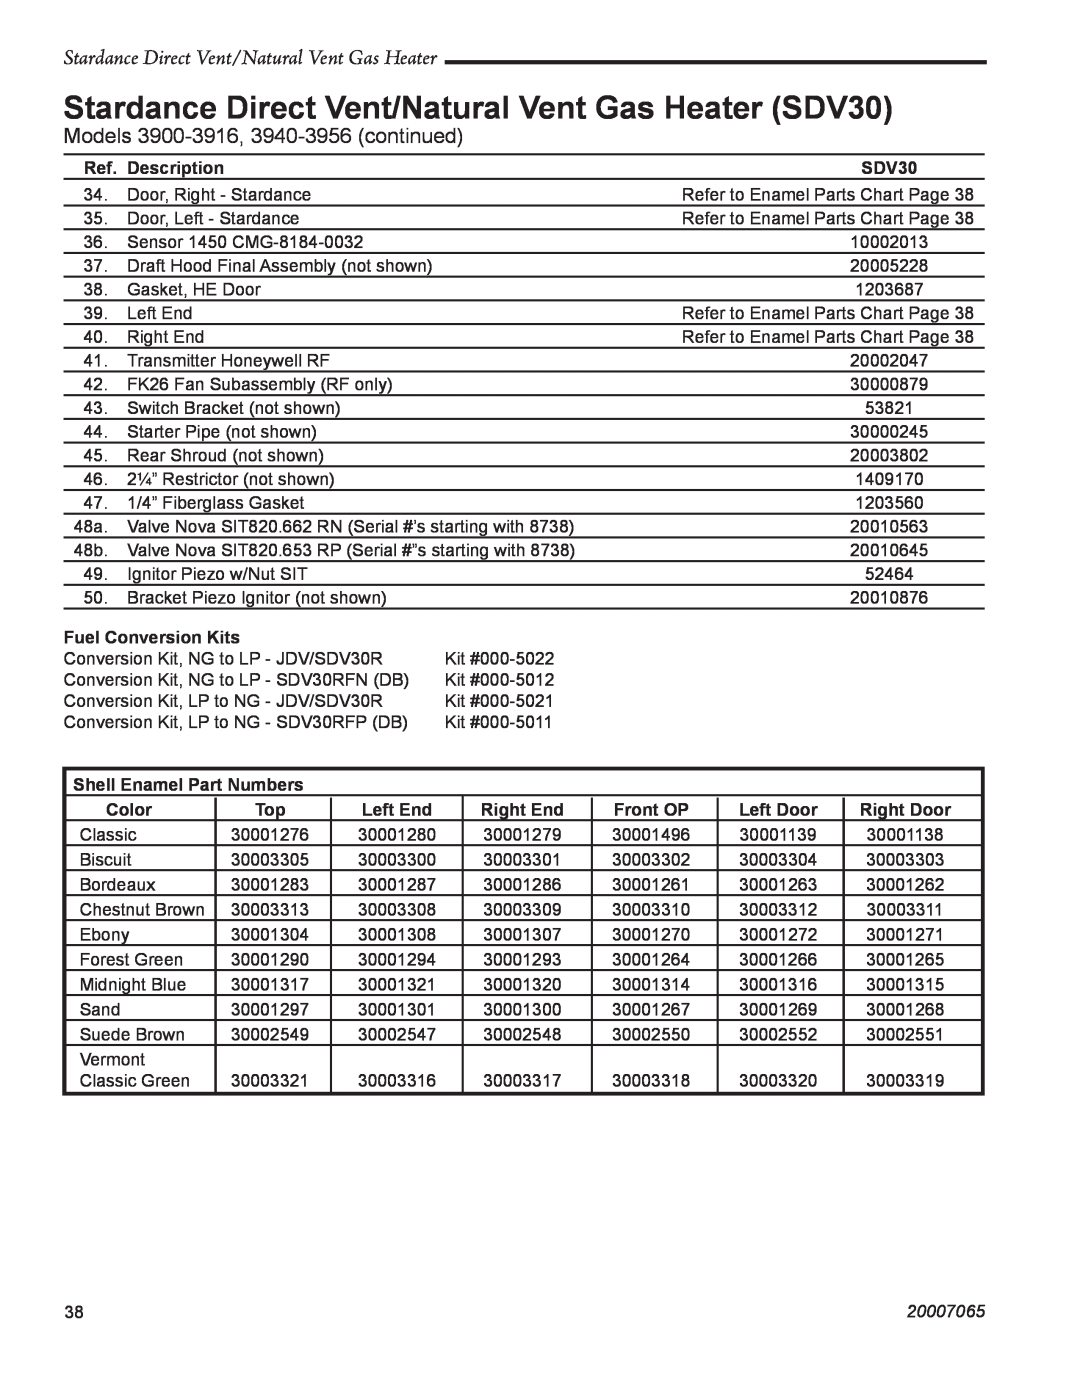 Vermont Casting SDV30 Stardance Direct Vent/Natural Vent Gas Heater, Models 3900-3916, 3940-3956continued, Description 